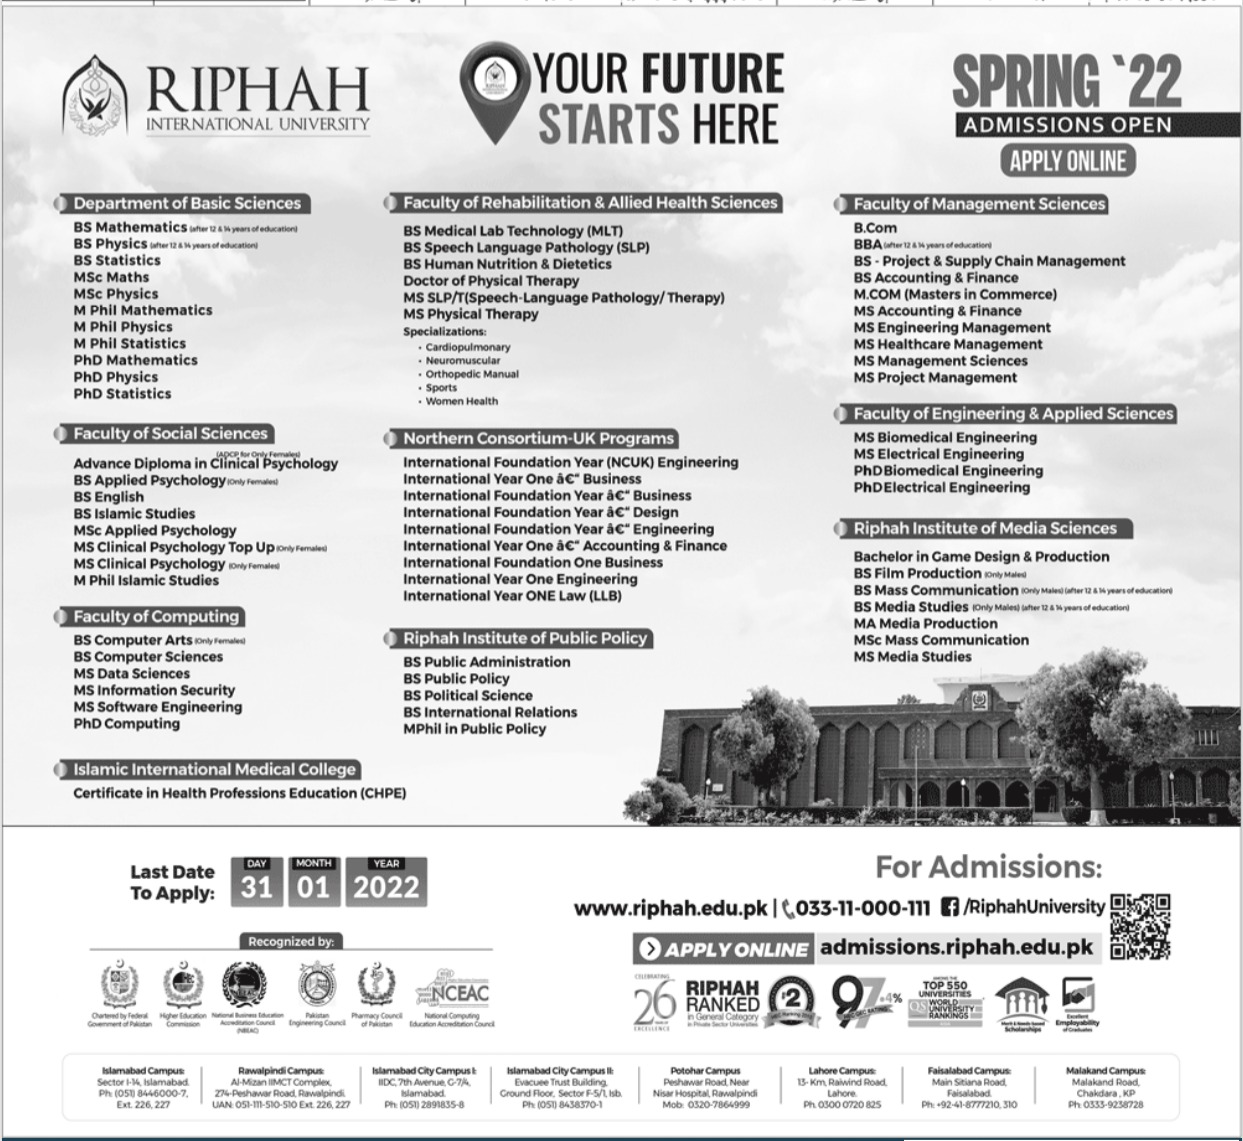 Riphah International University Postgraduate Admissions 2022